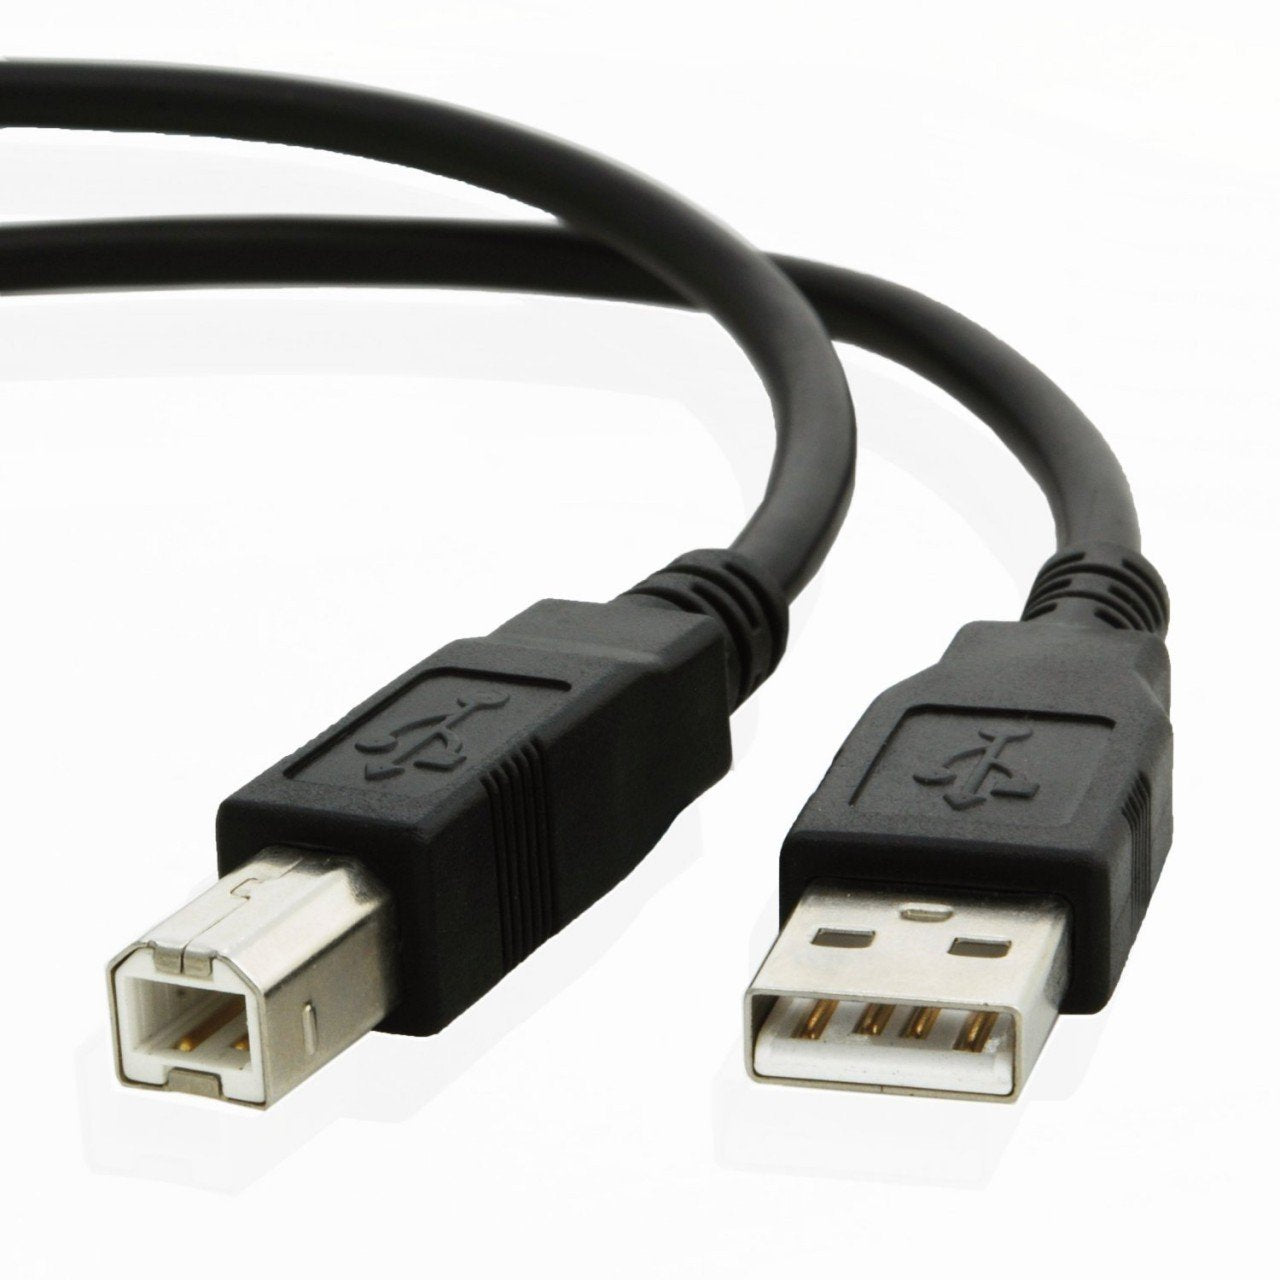 USB cable for Hp LASERJET PRO M277dw